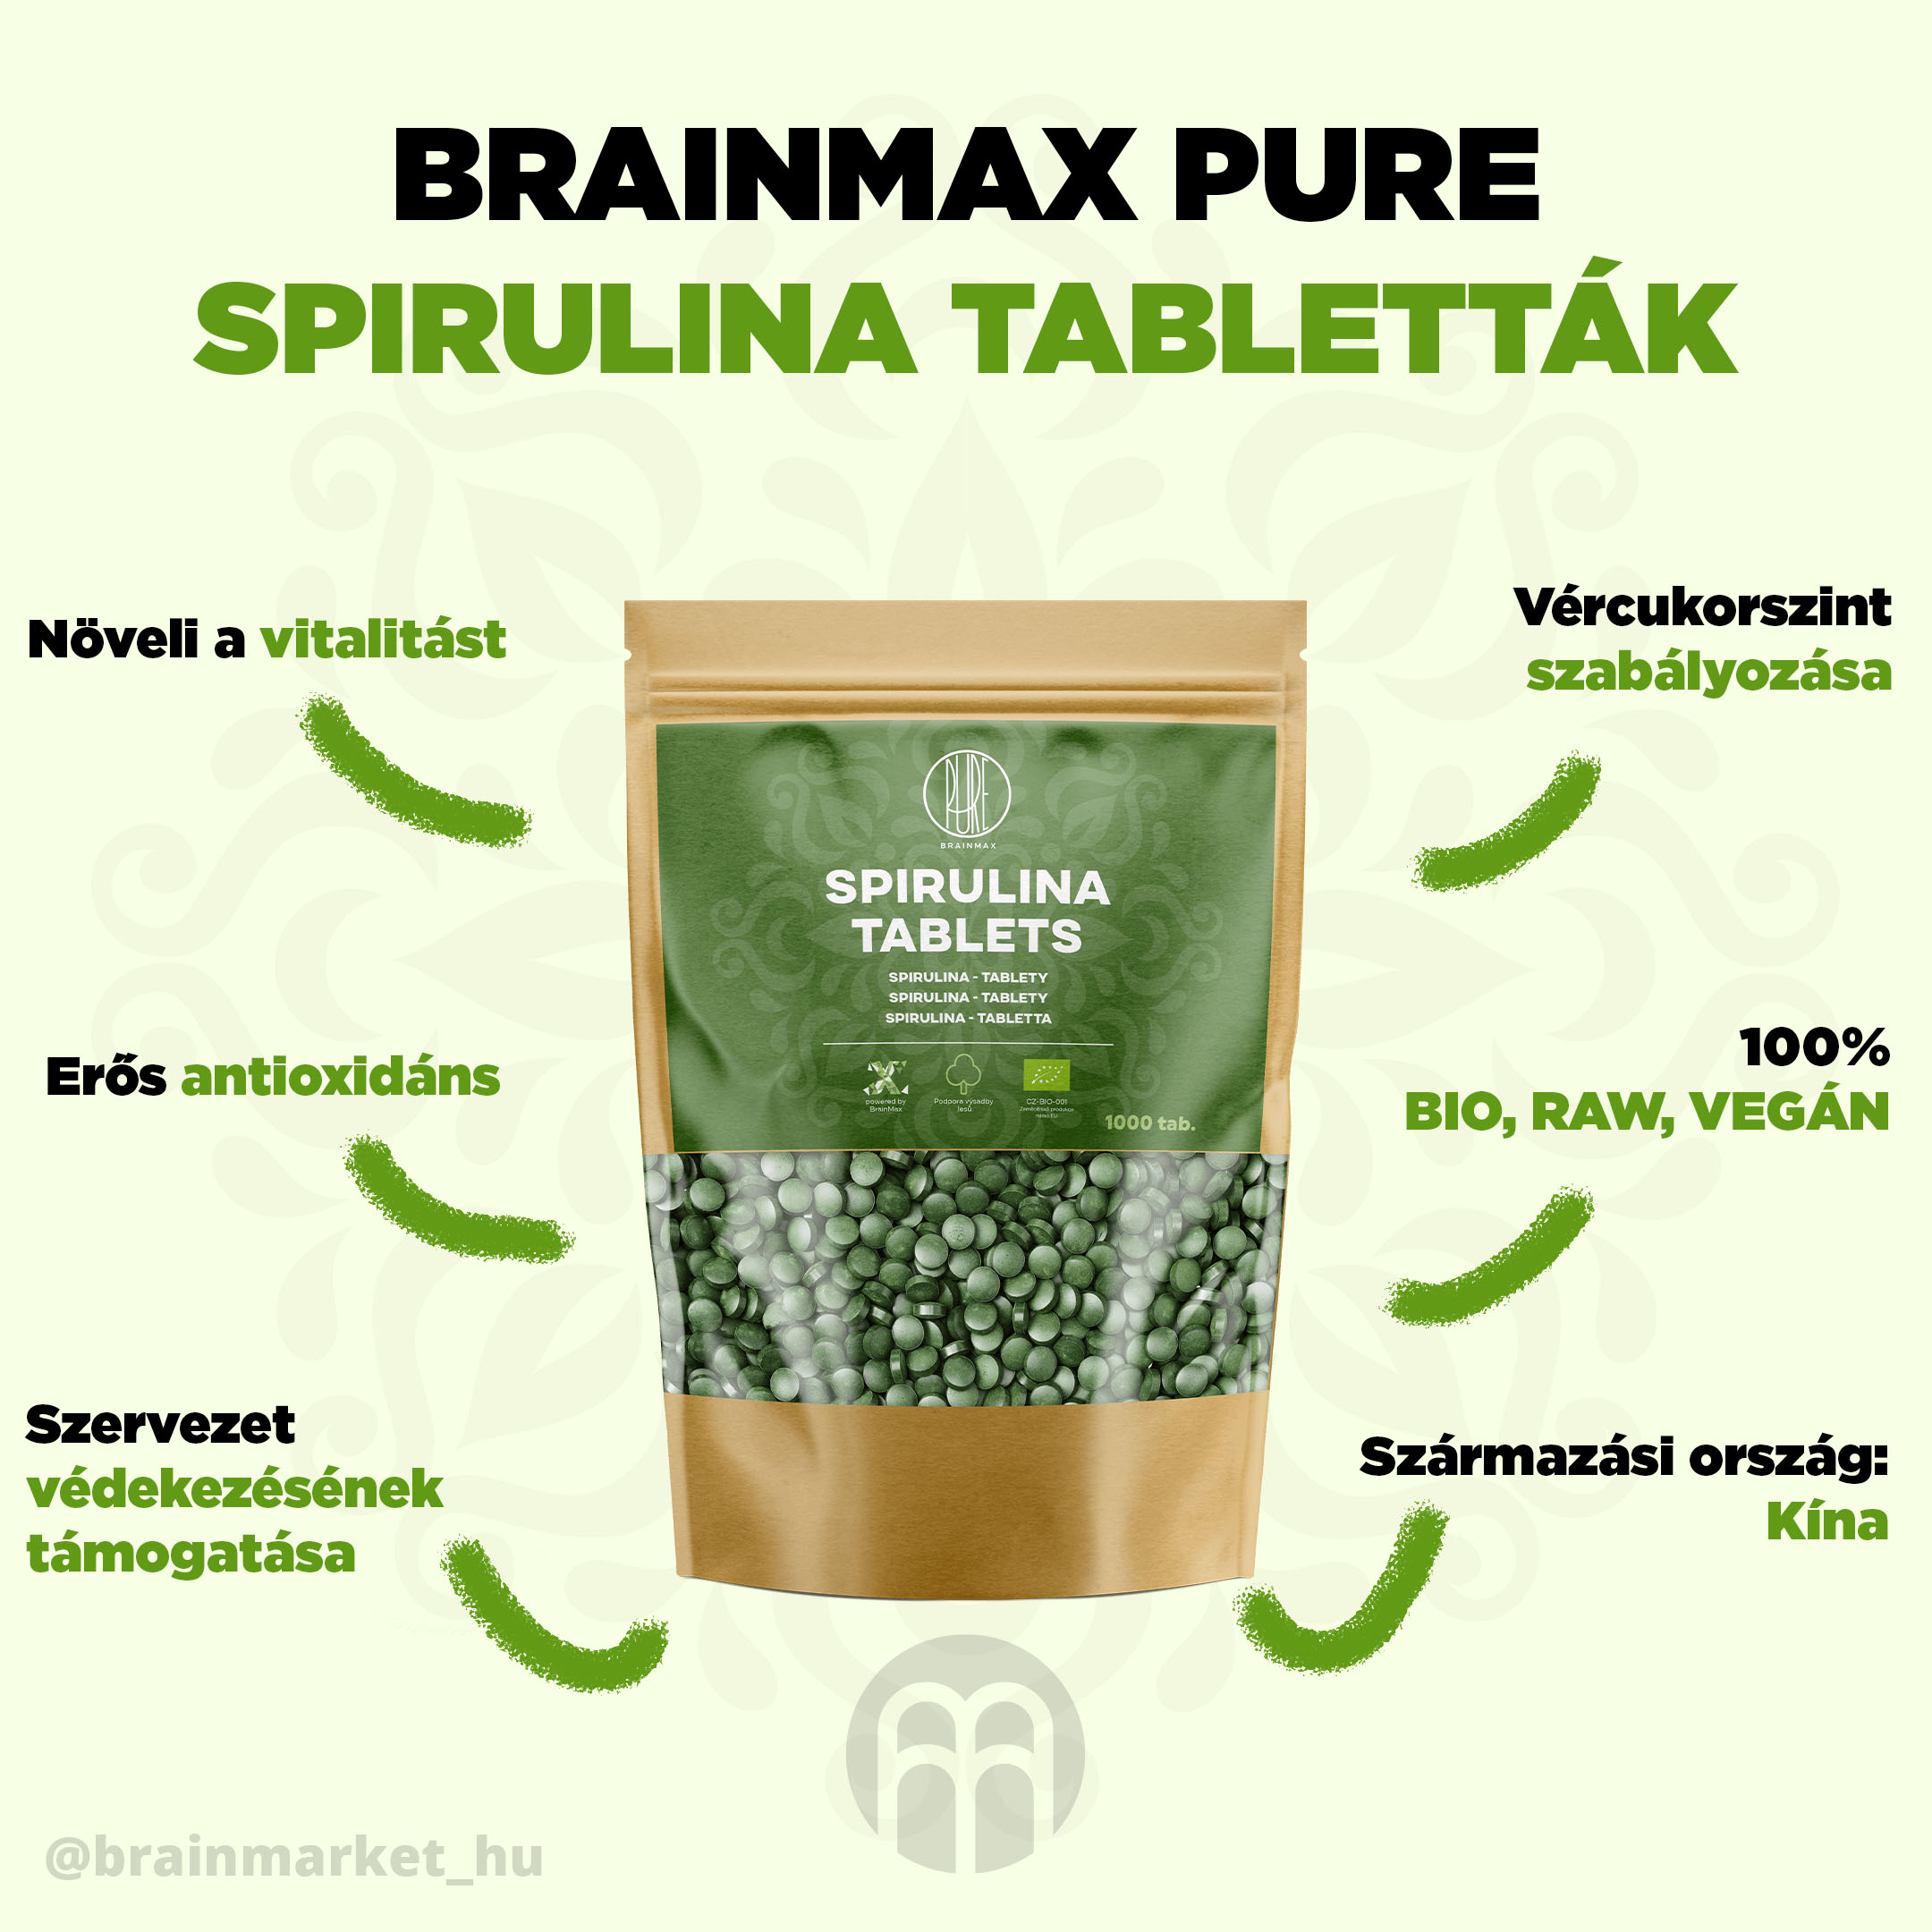 Brainmax pure spirulina infografika brainmarket CZ (1)